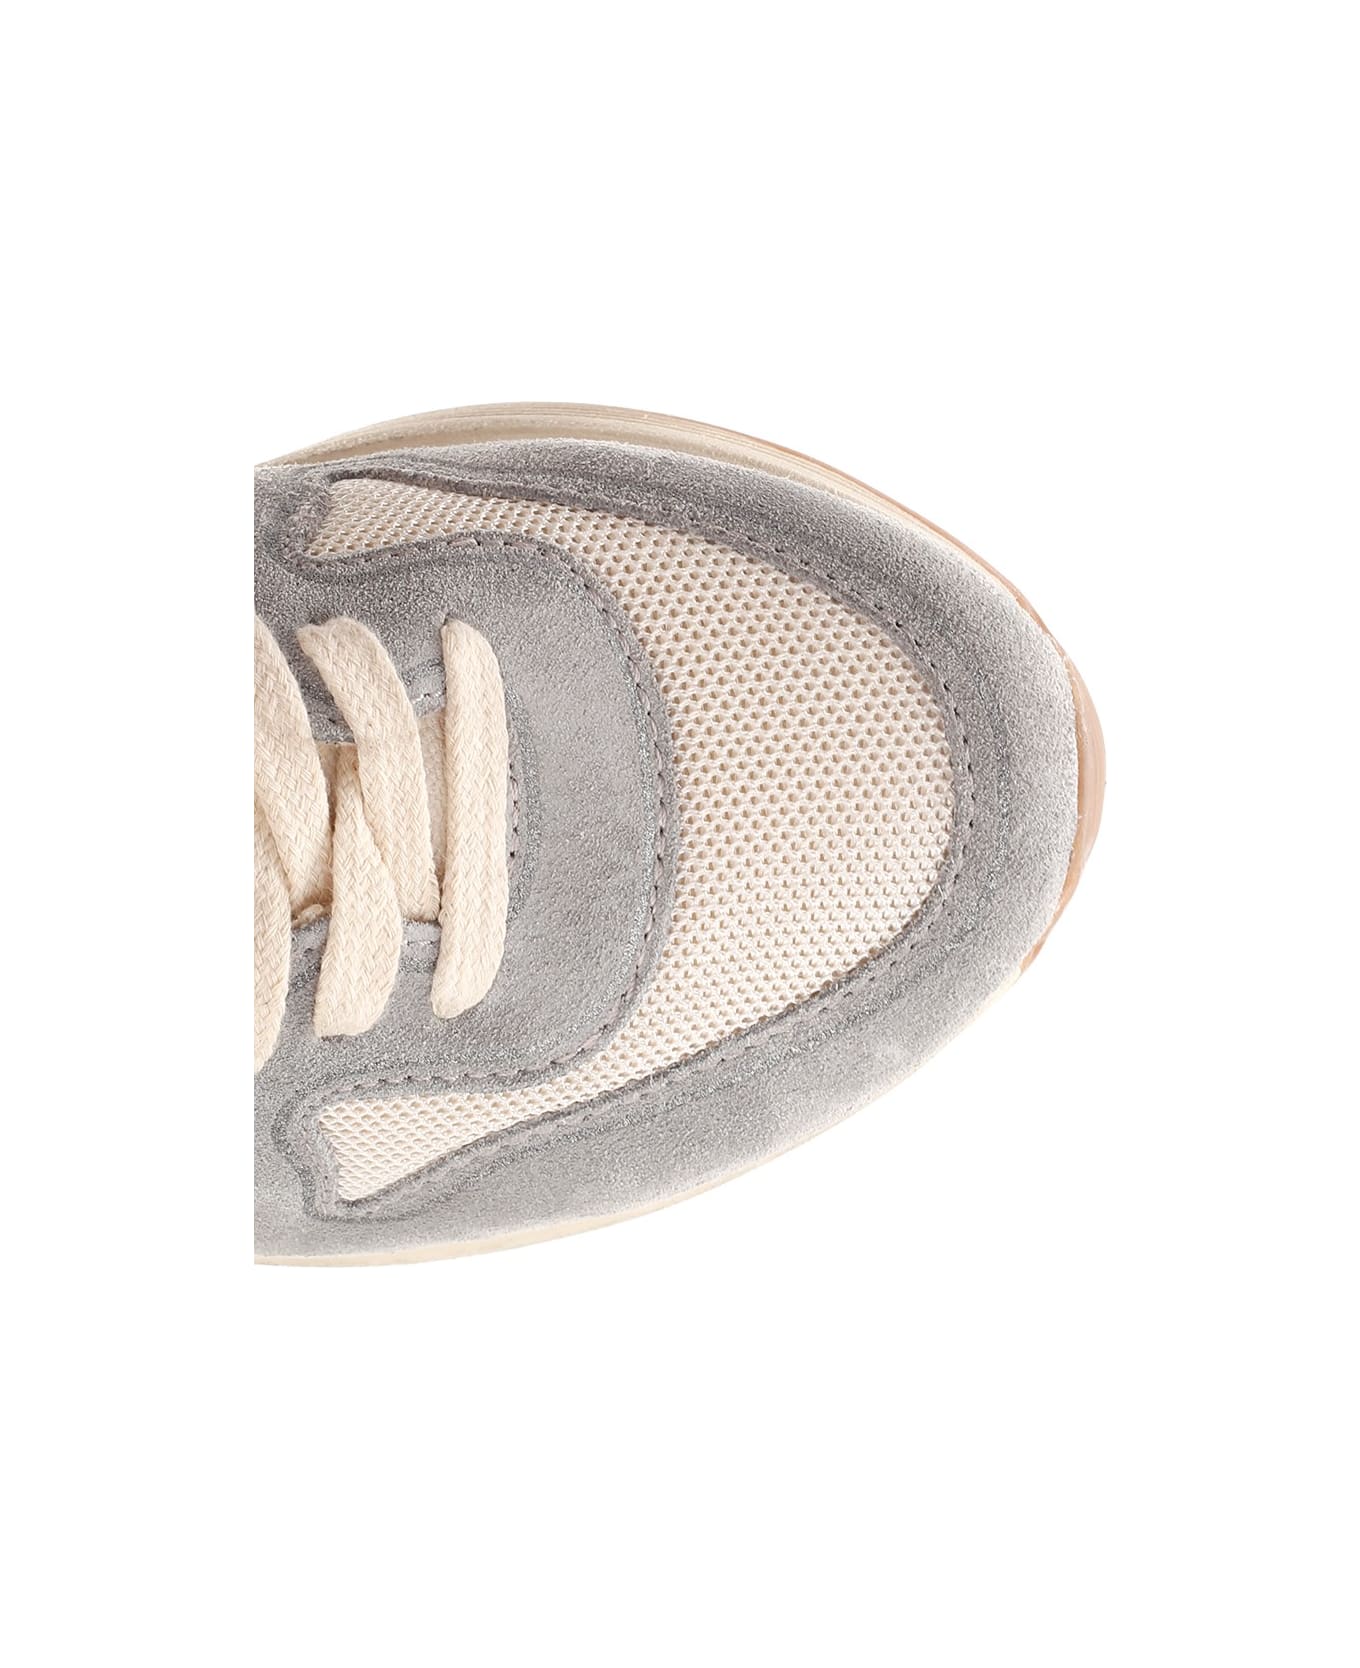 Golden Goose Running Sole Sneakers - Silver/White/Cream/Smoke Grey/Silver